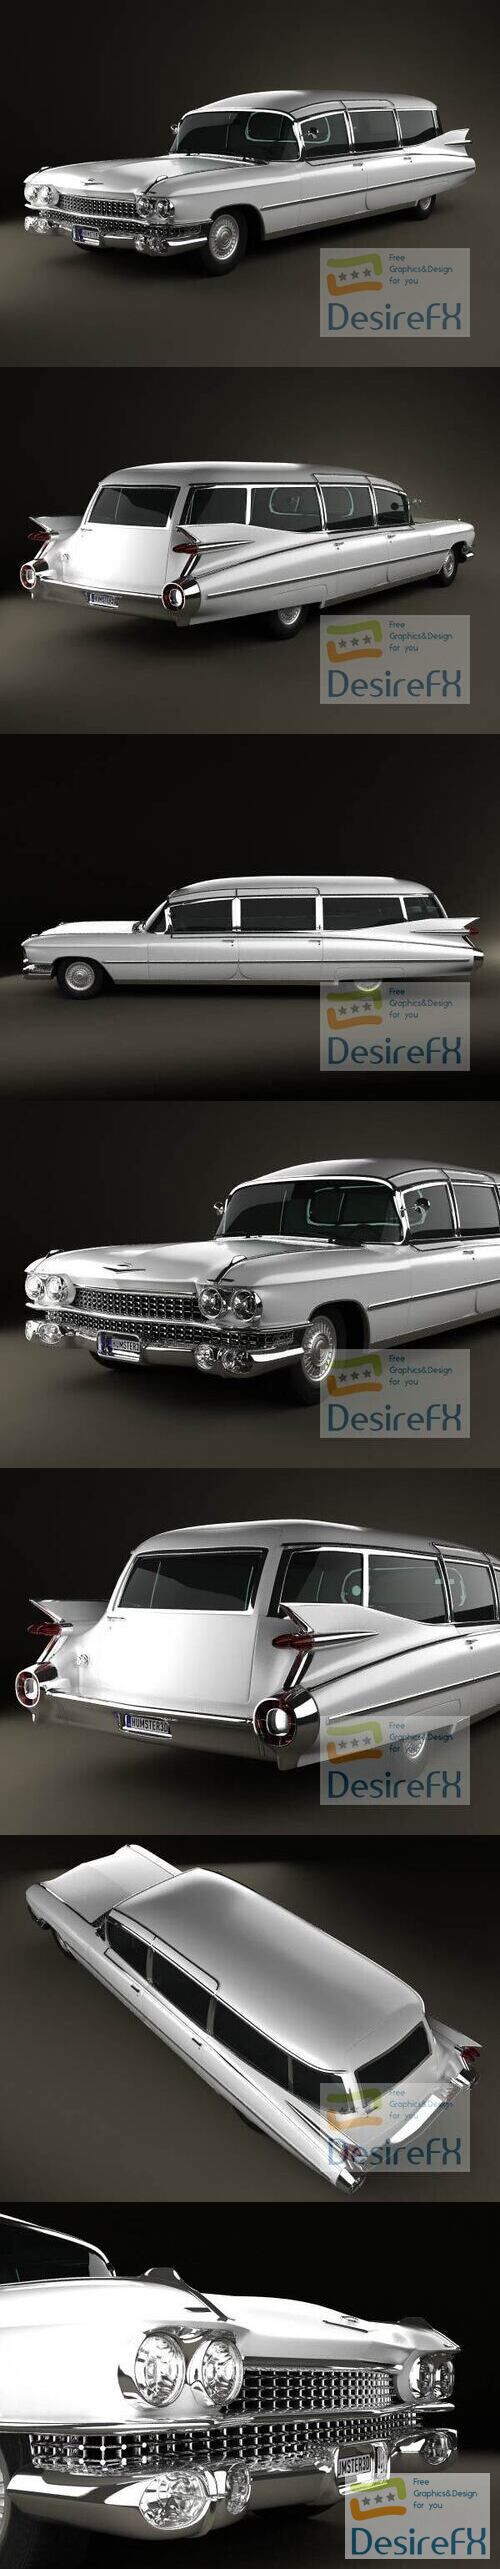 Cadillac Fleetwood 75 Miller-Meteor Hearse 1959 wagon 3D Model